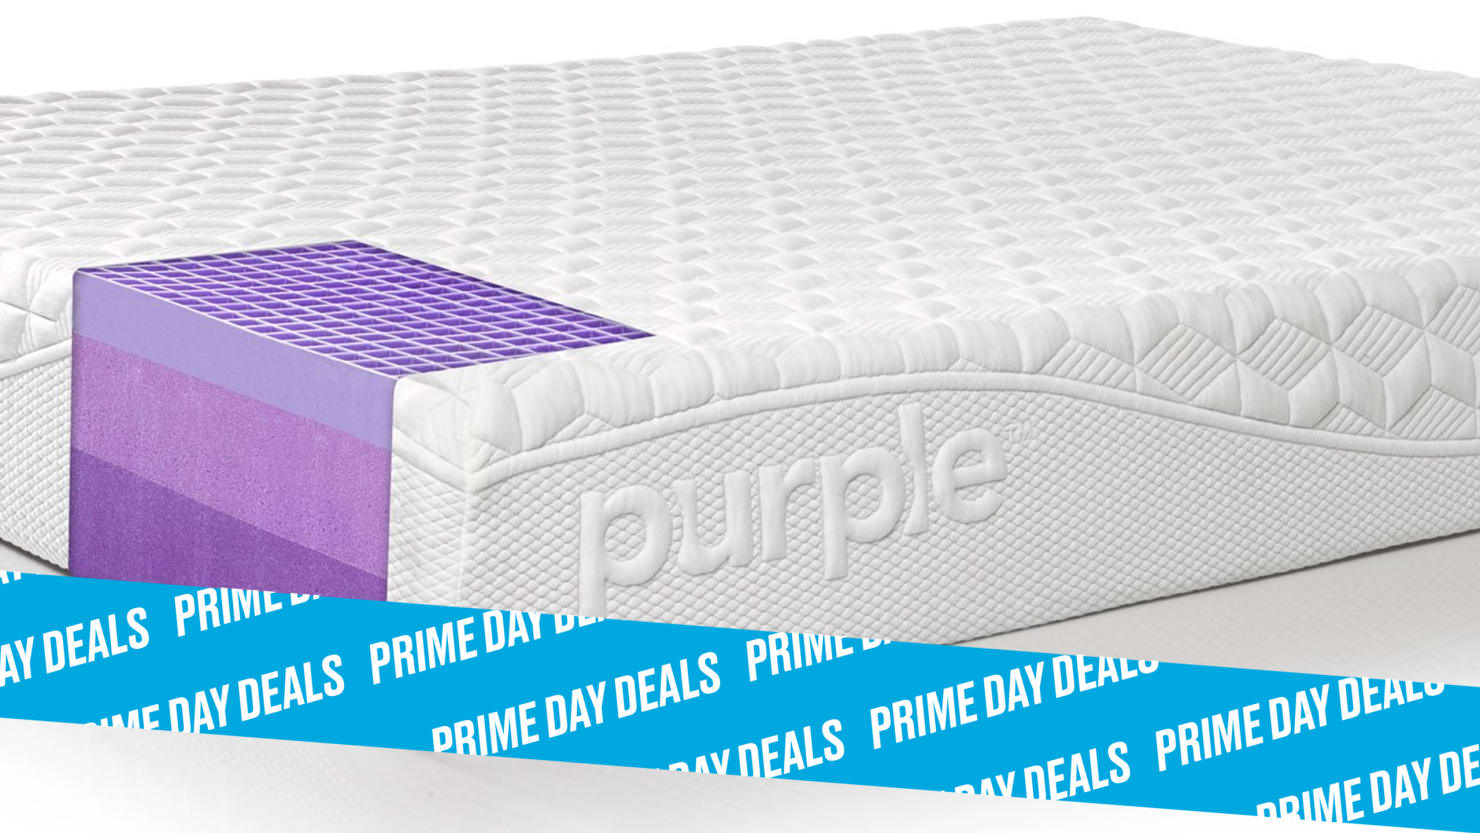 ashley furniture employee discount on purple mattress